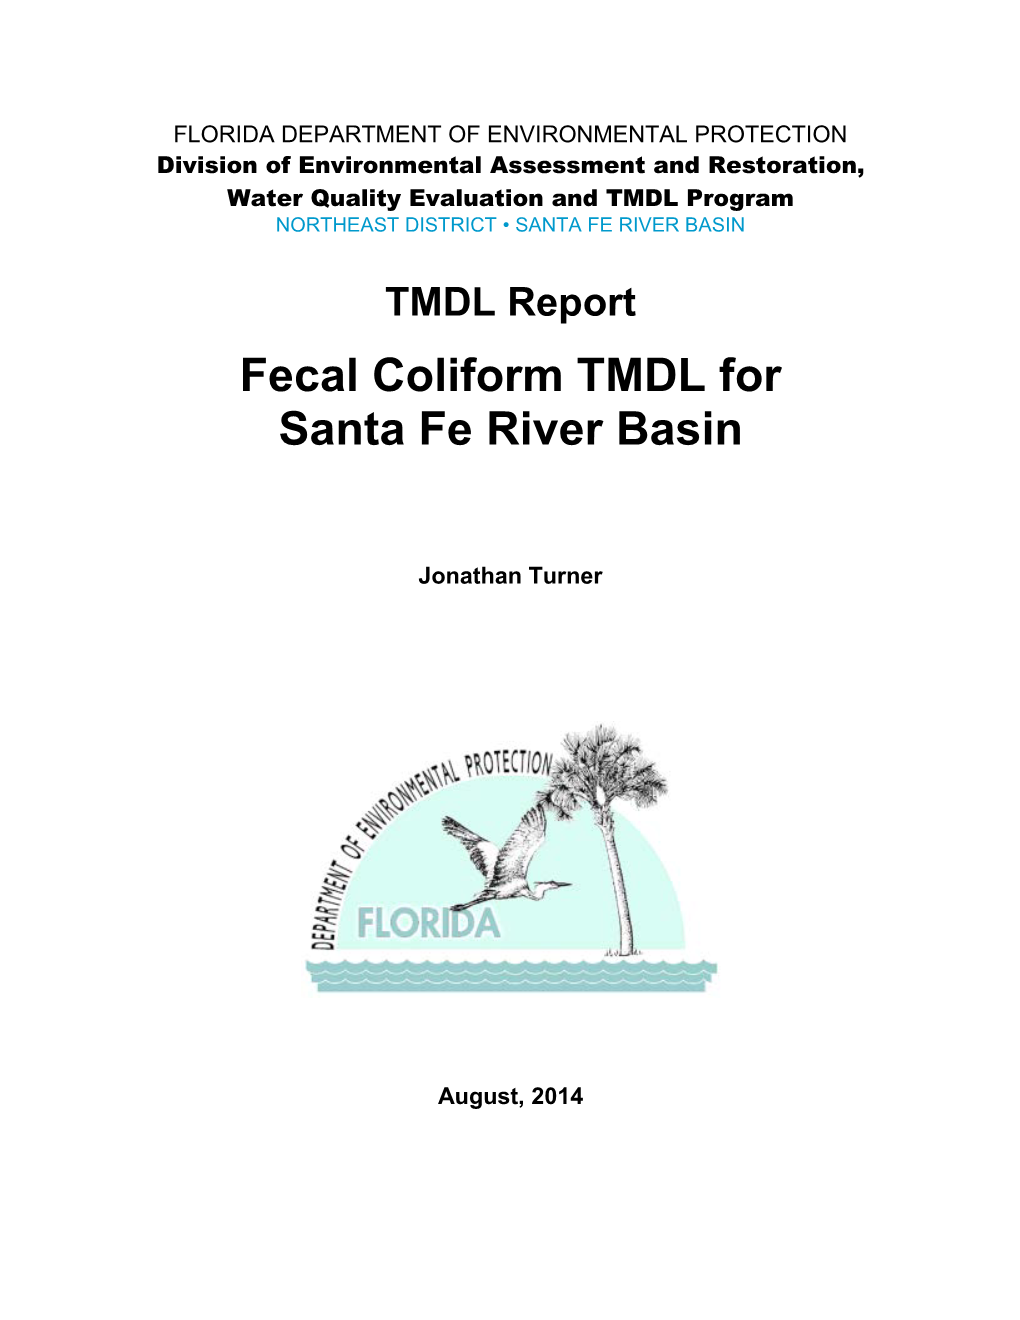 Santa Fe River Basin Fecal TMDL